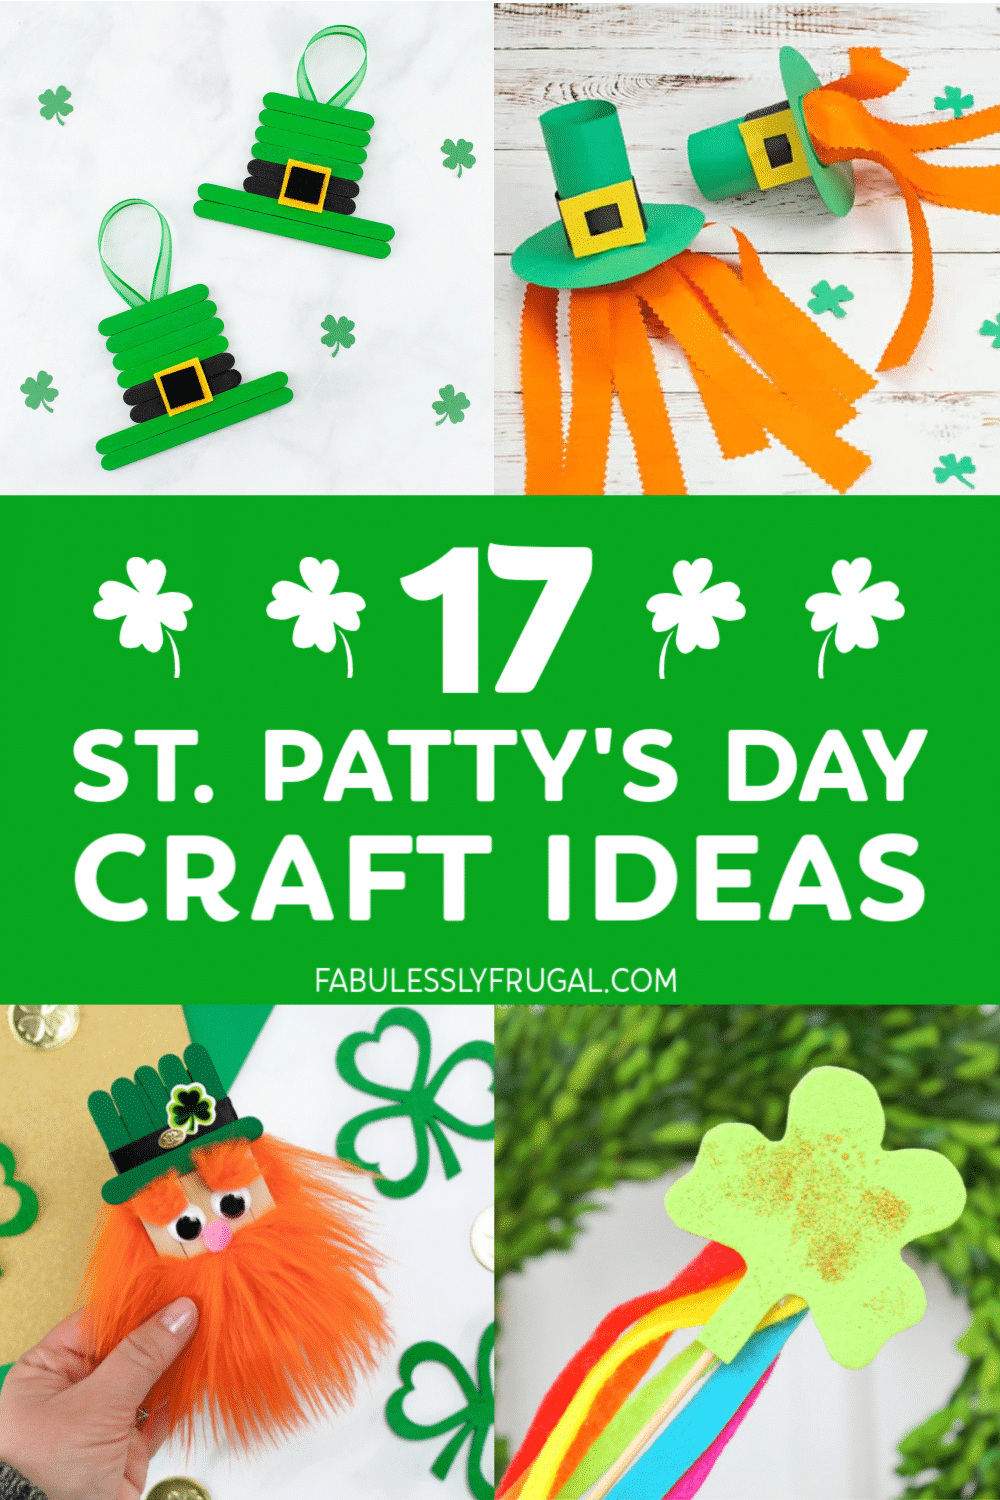 St. Patrick's Day craft ideas